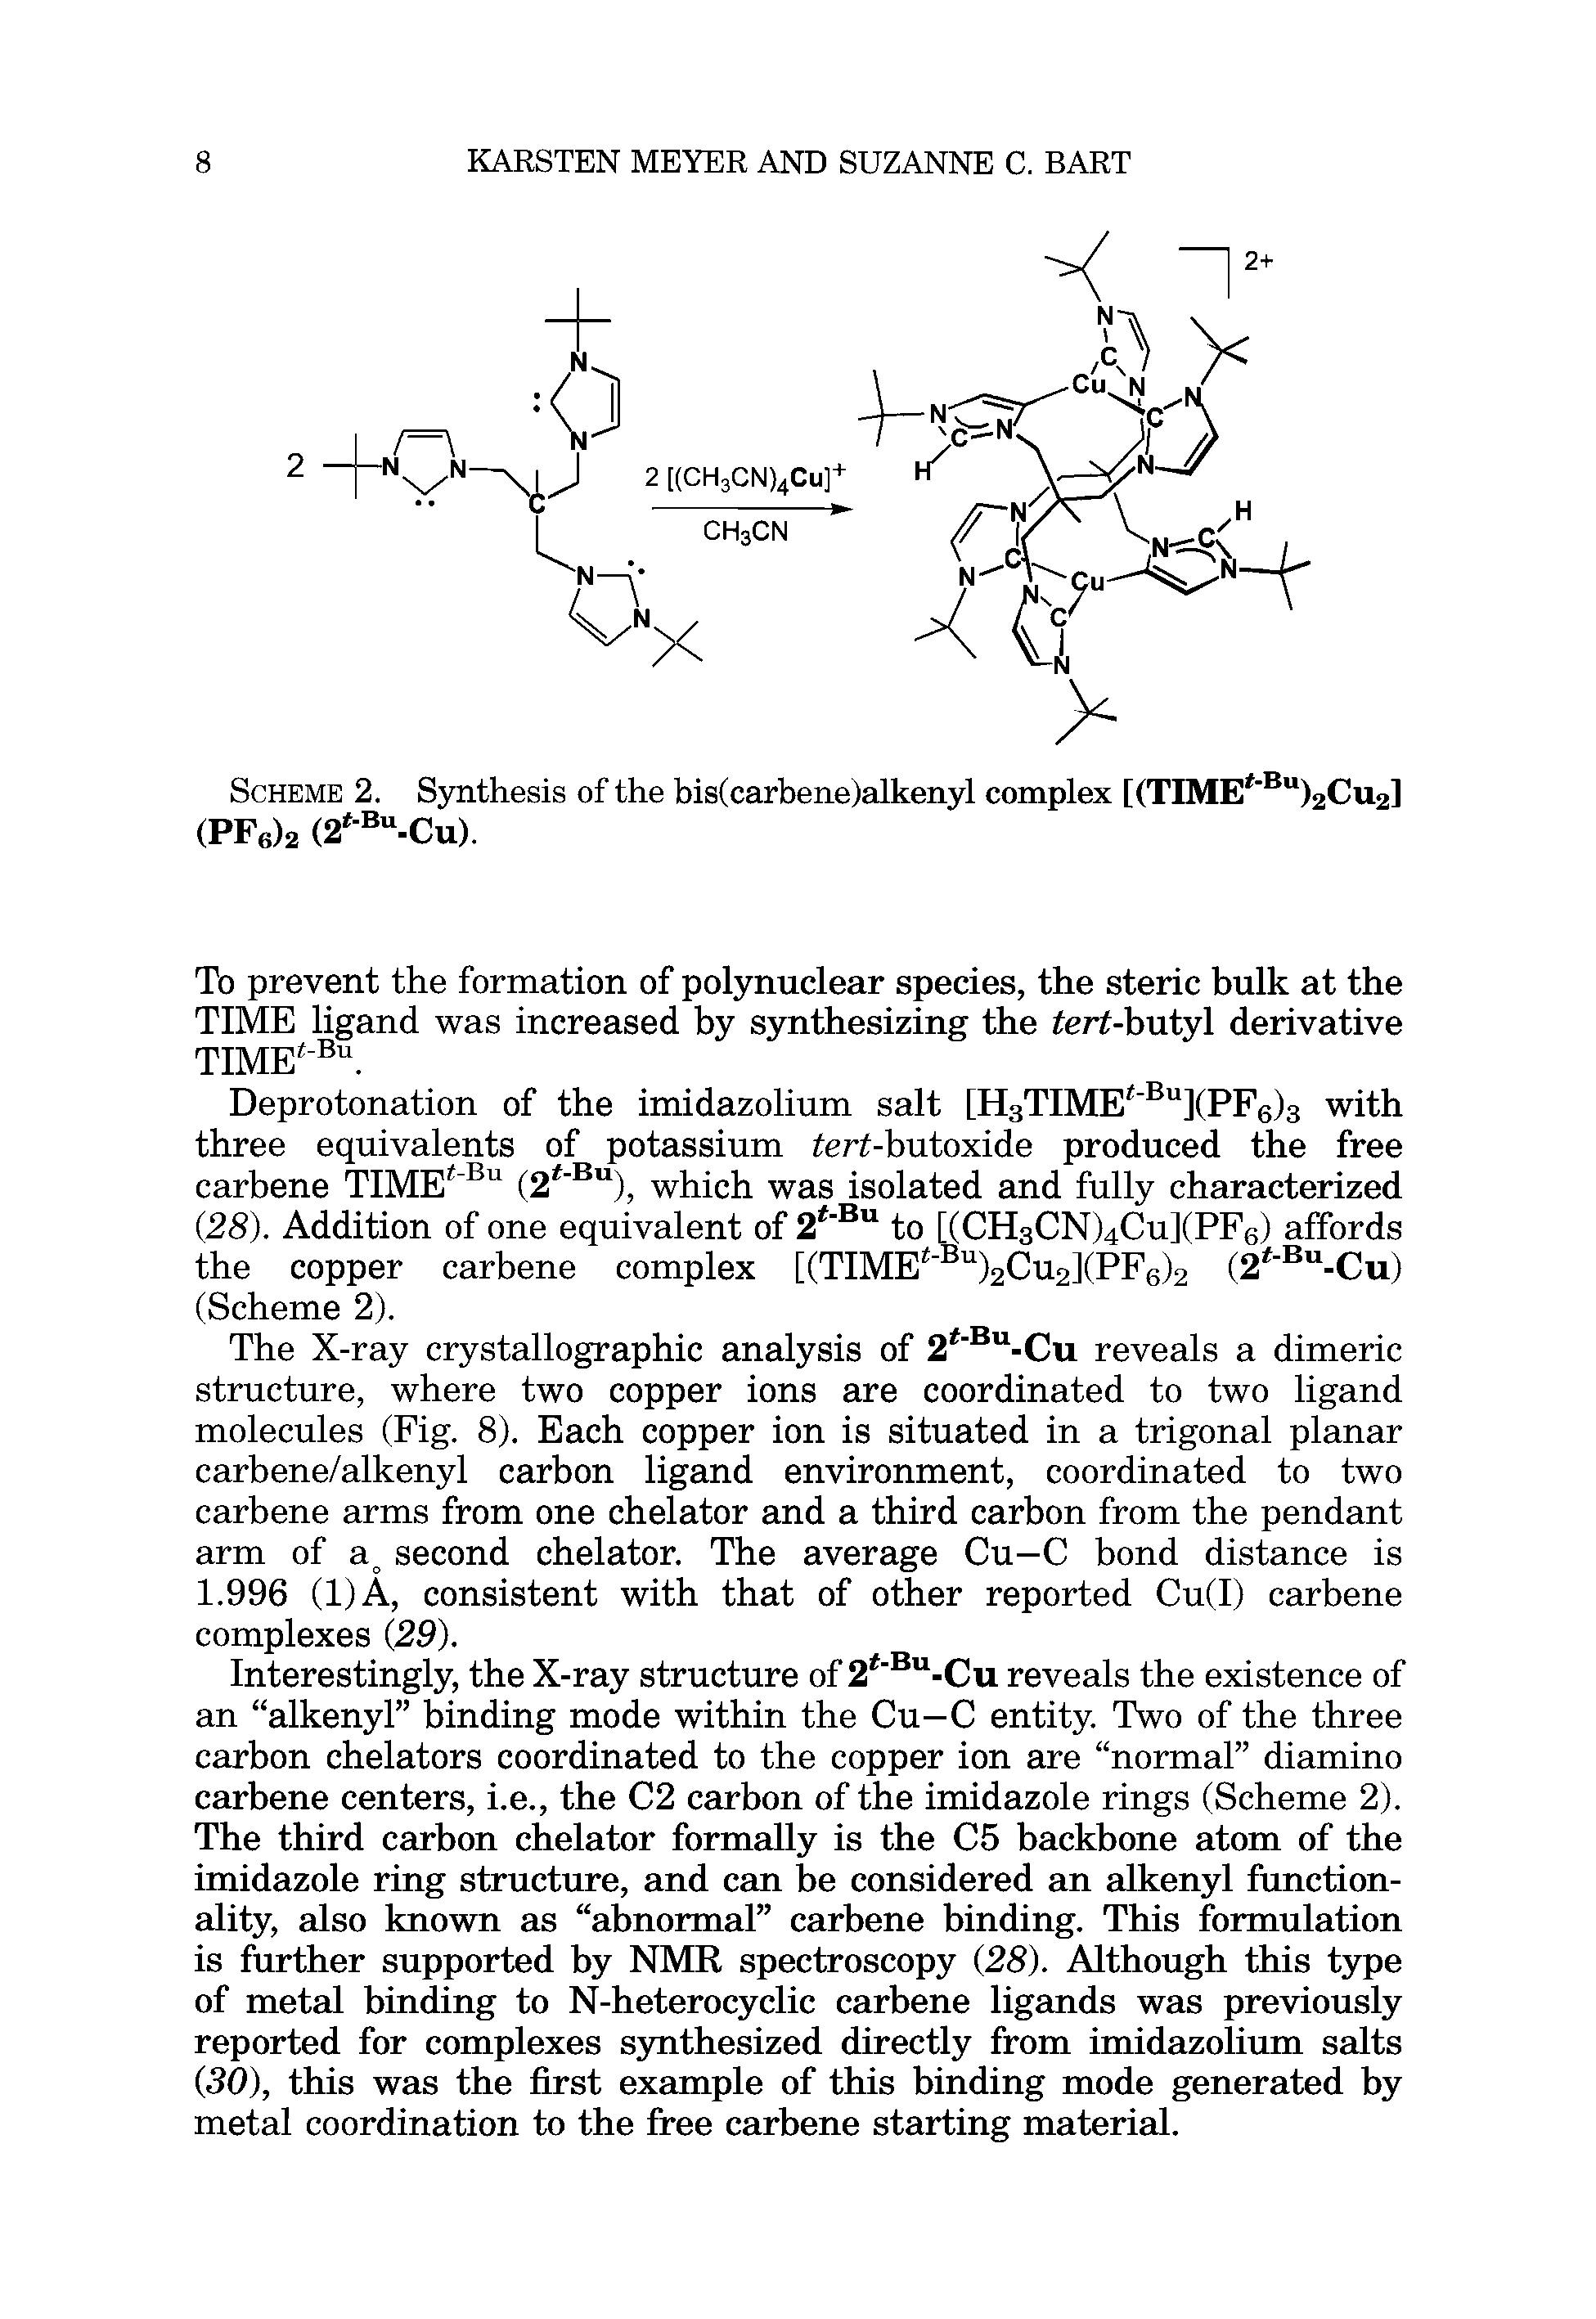 Scheme 2. Synthesis of the bis(carbene)alkenyl complex [(TIME )2Cu2] PFe)2 (2 - "-Cu).